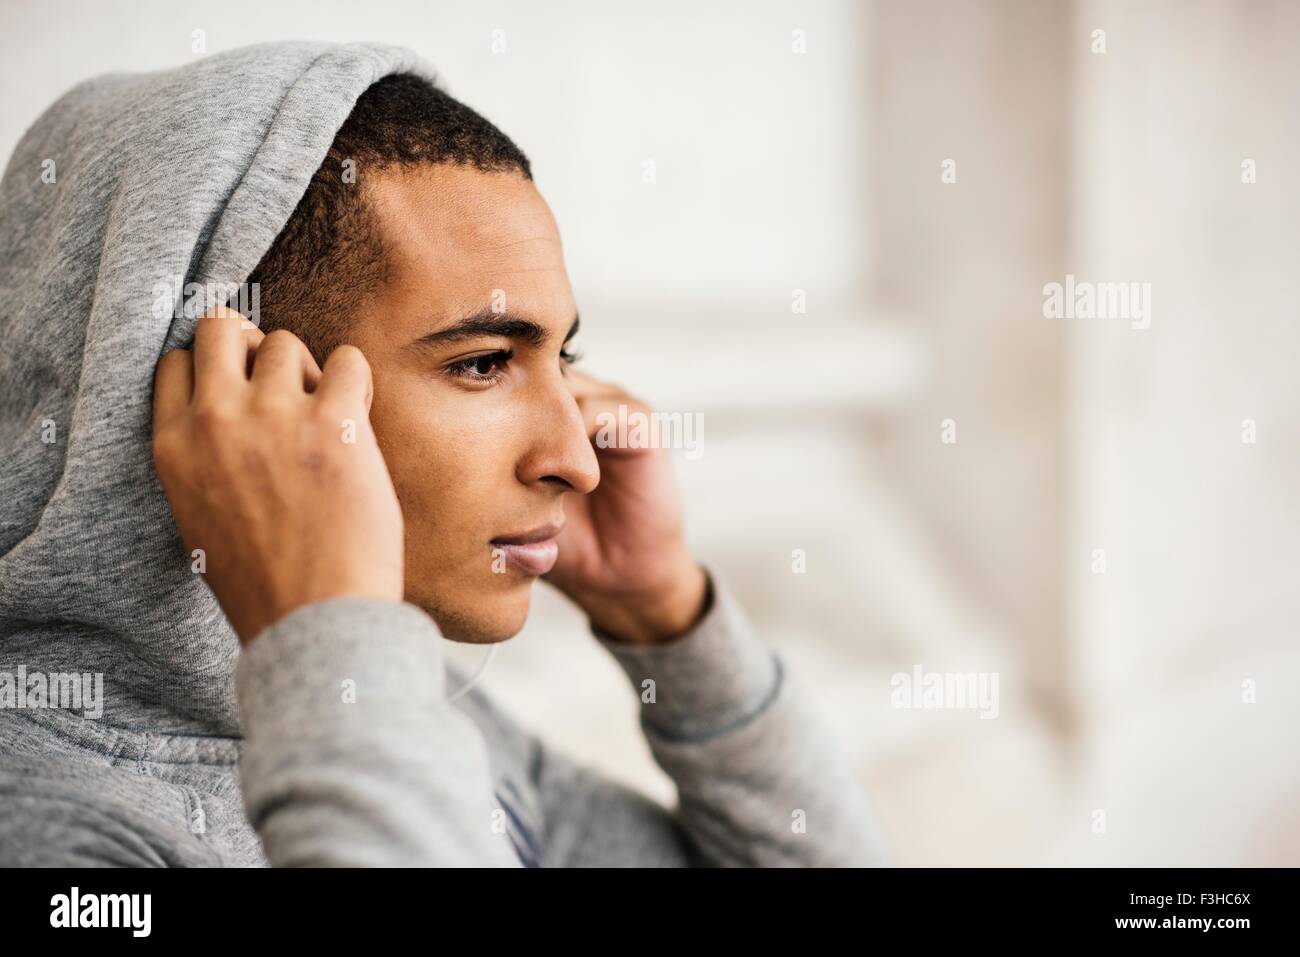 Male runner wearing grey hoody putting in earphones Stock Photo